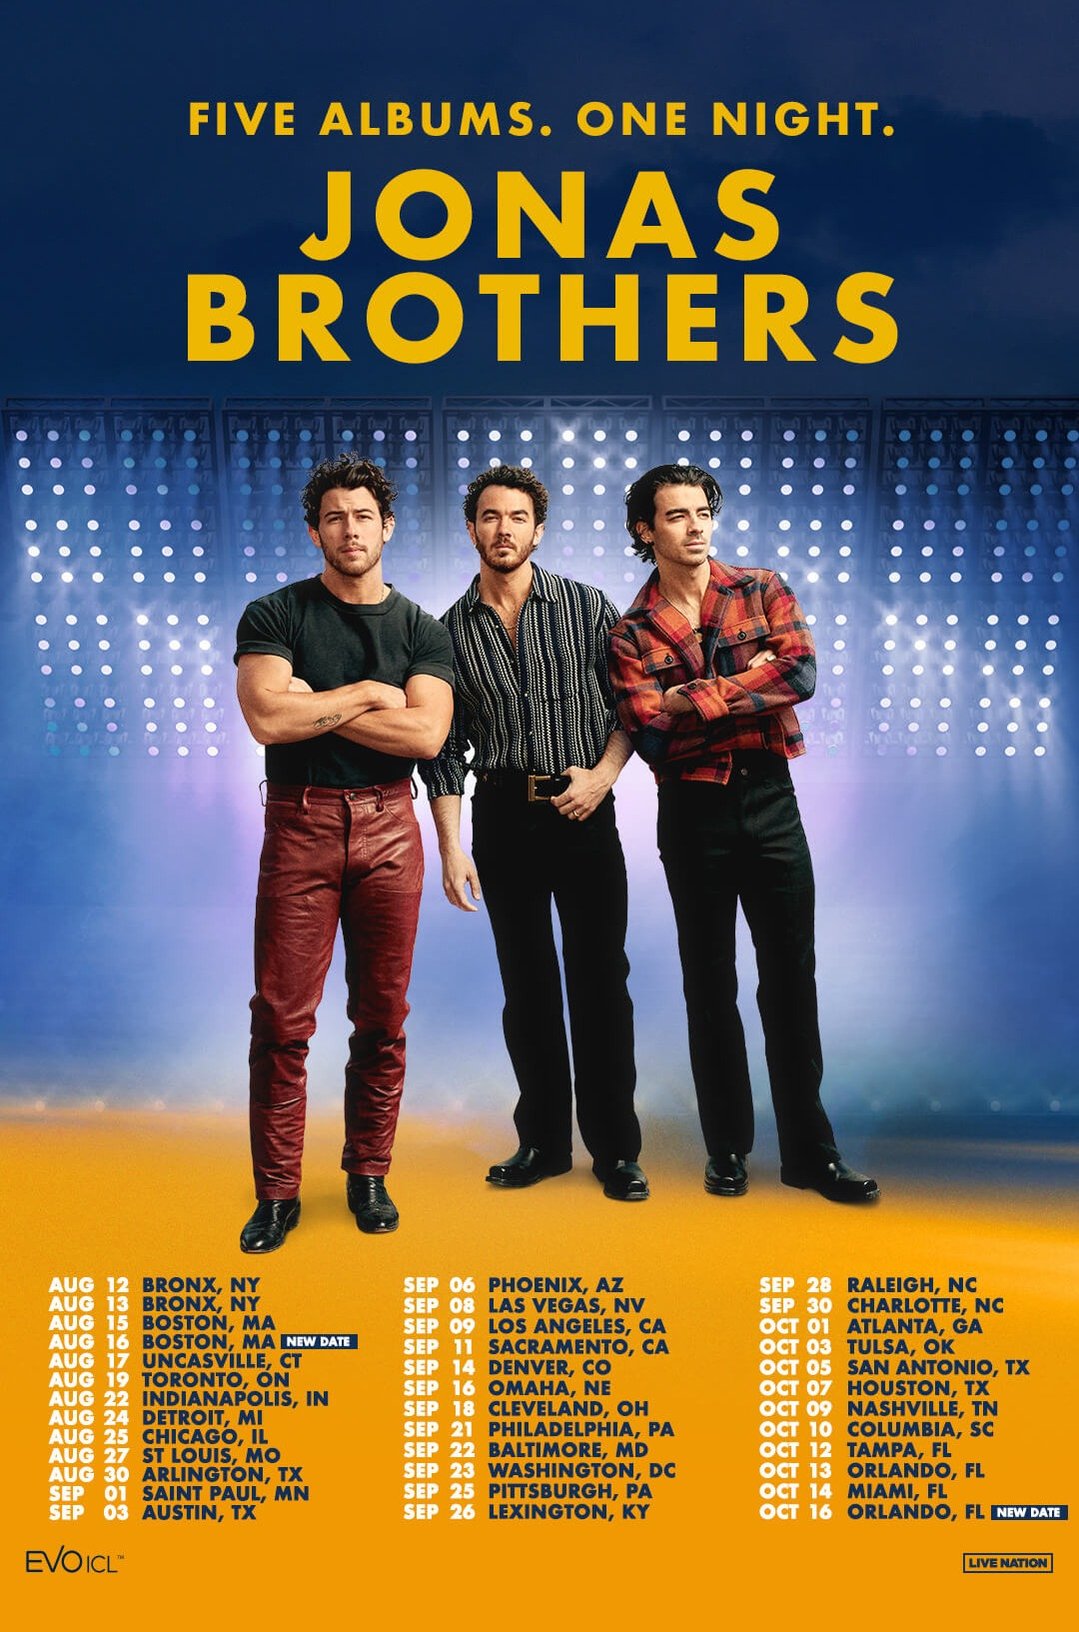 jonas brothers tour dates 2008